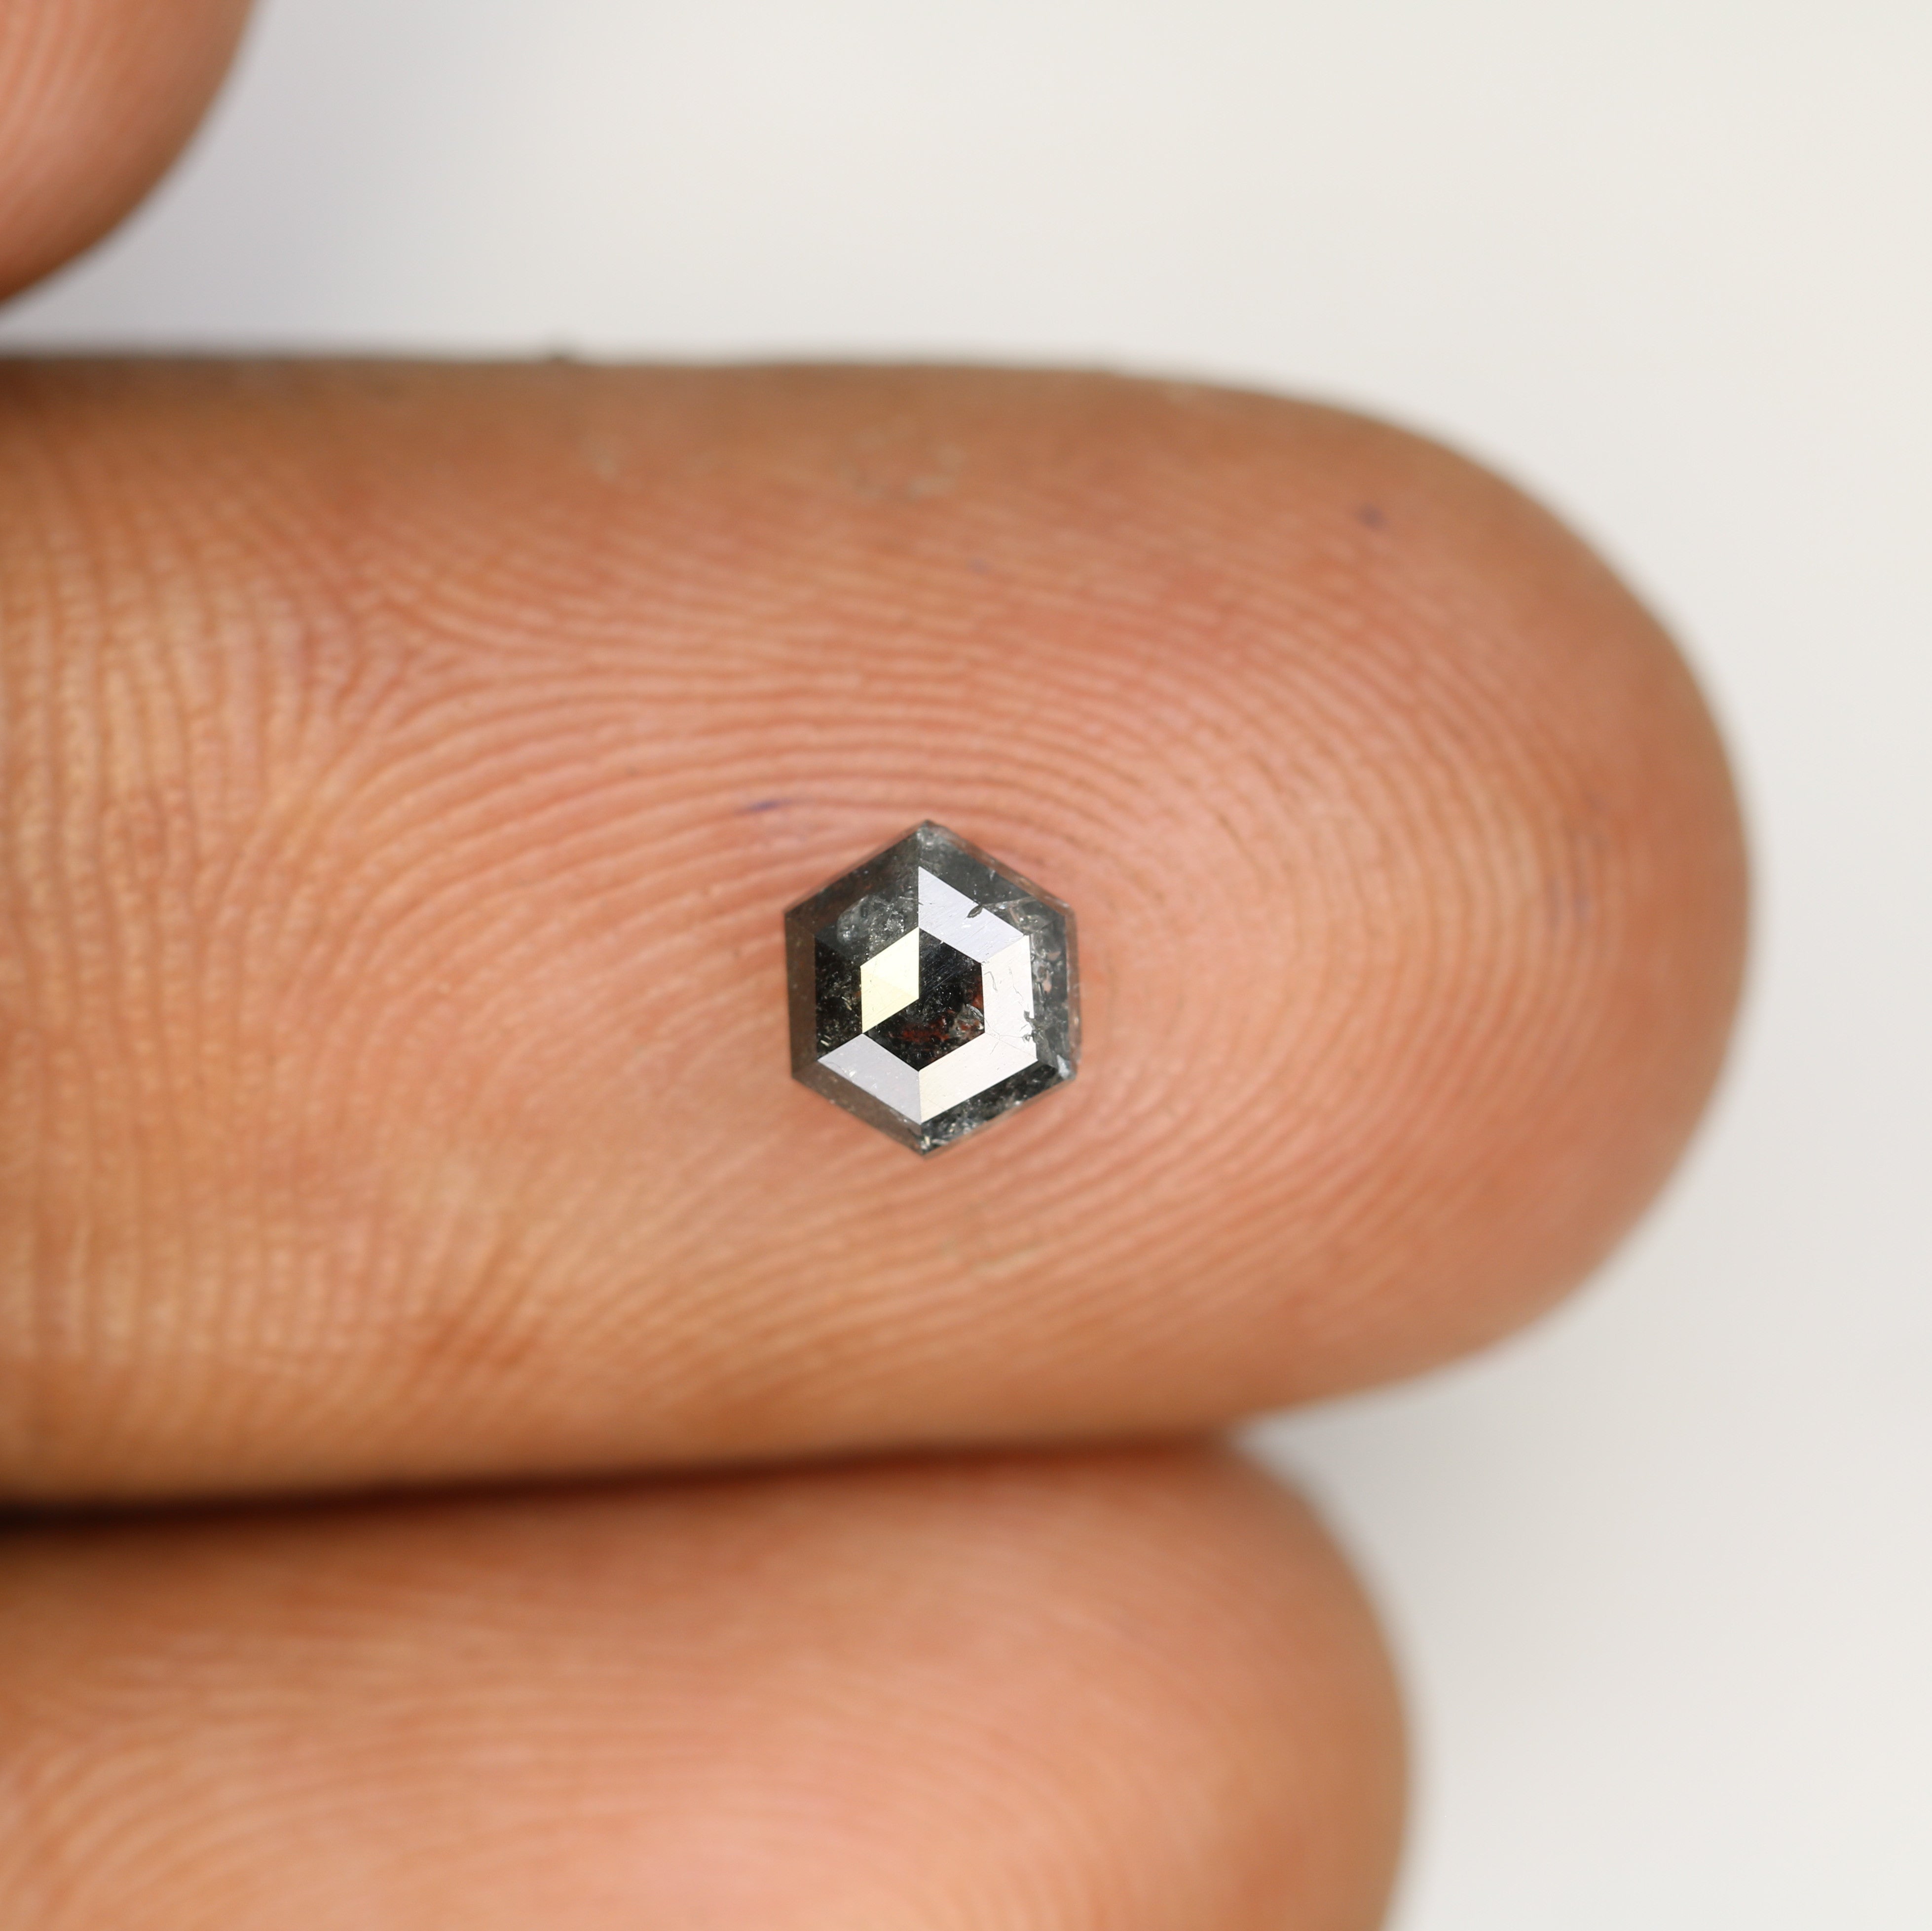 0.55 CT Salt And Pepper Elongated Hexagon Shape Diamond For Engagement Ring